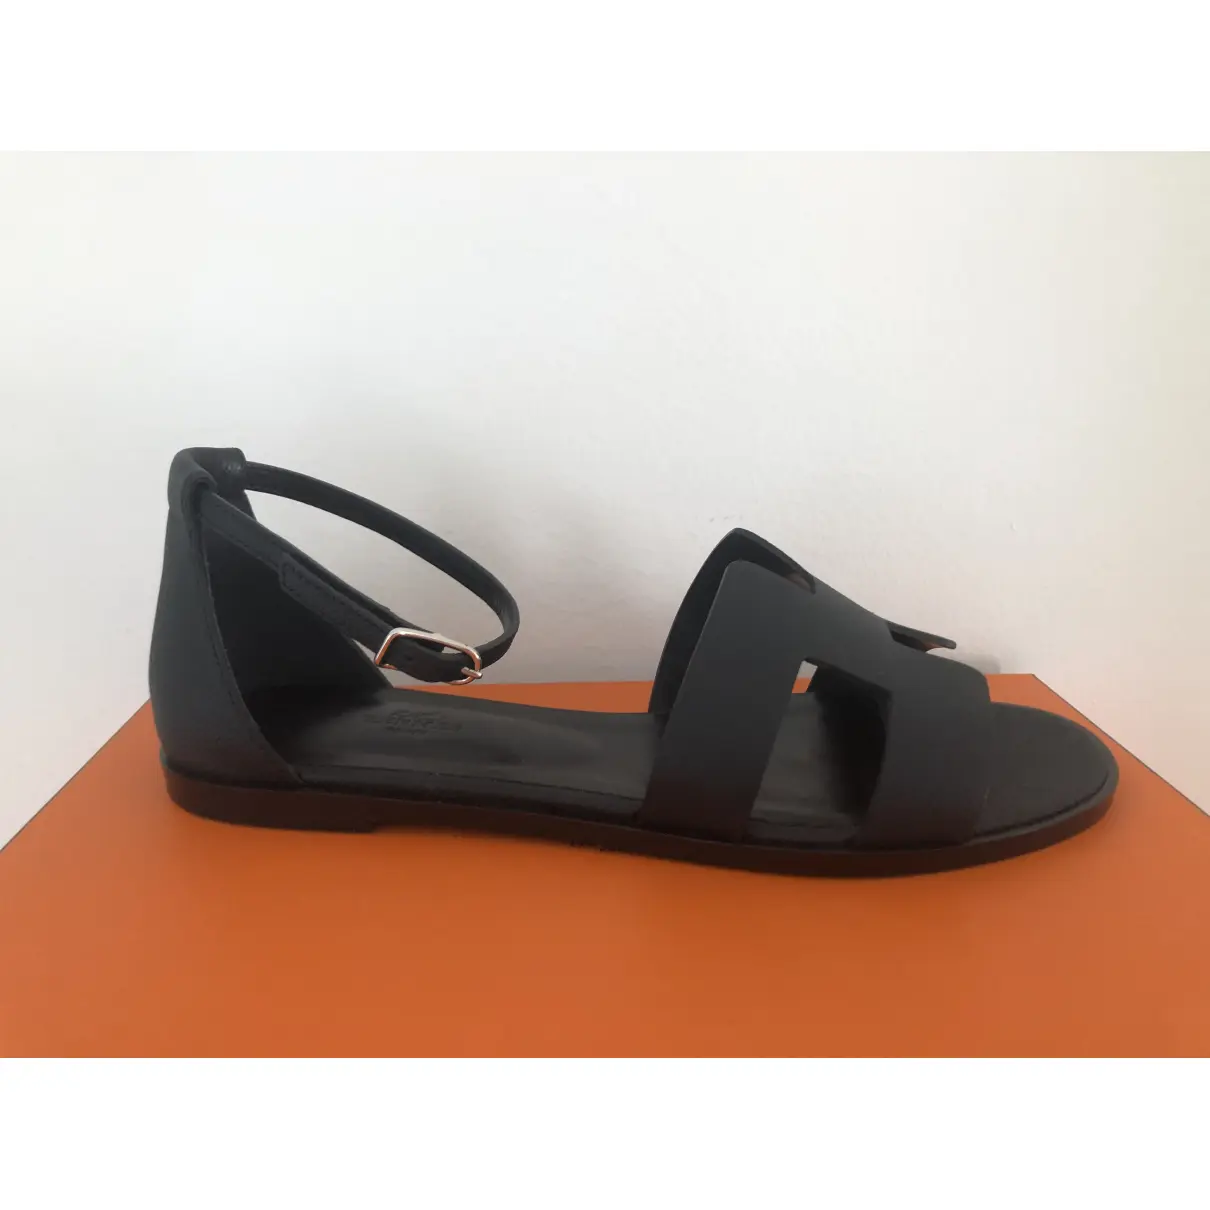 Buy Hermès Santorini leather sandal online